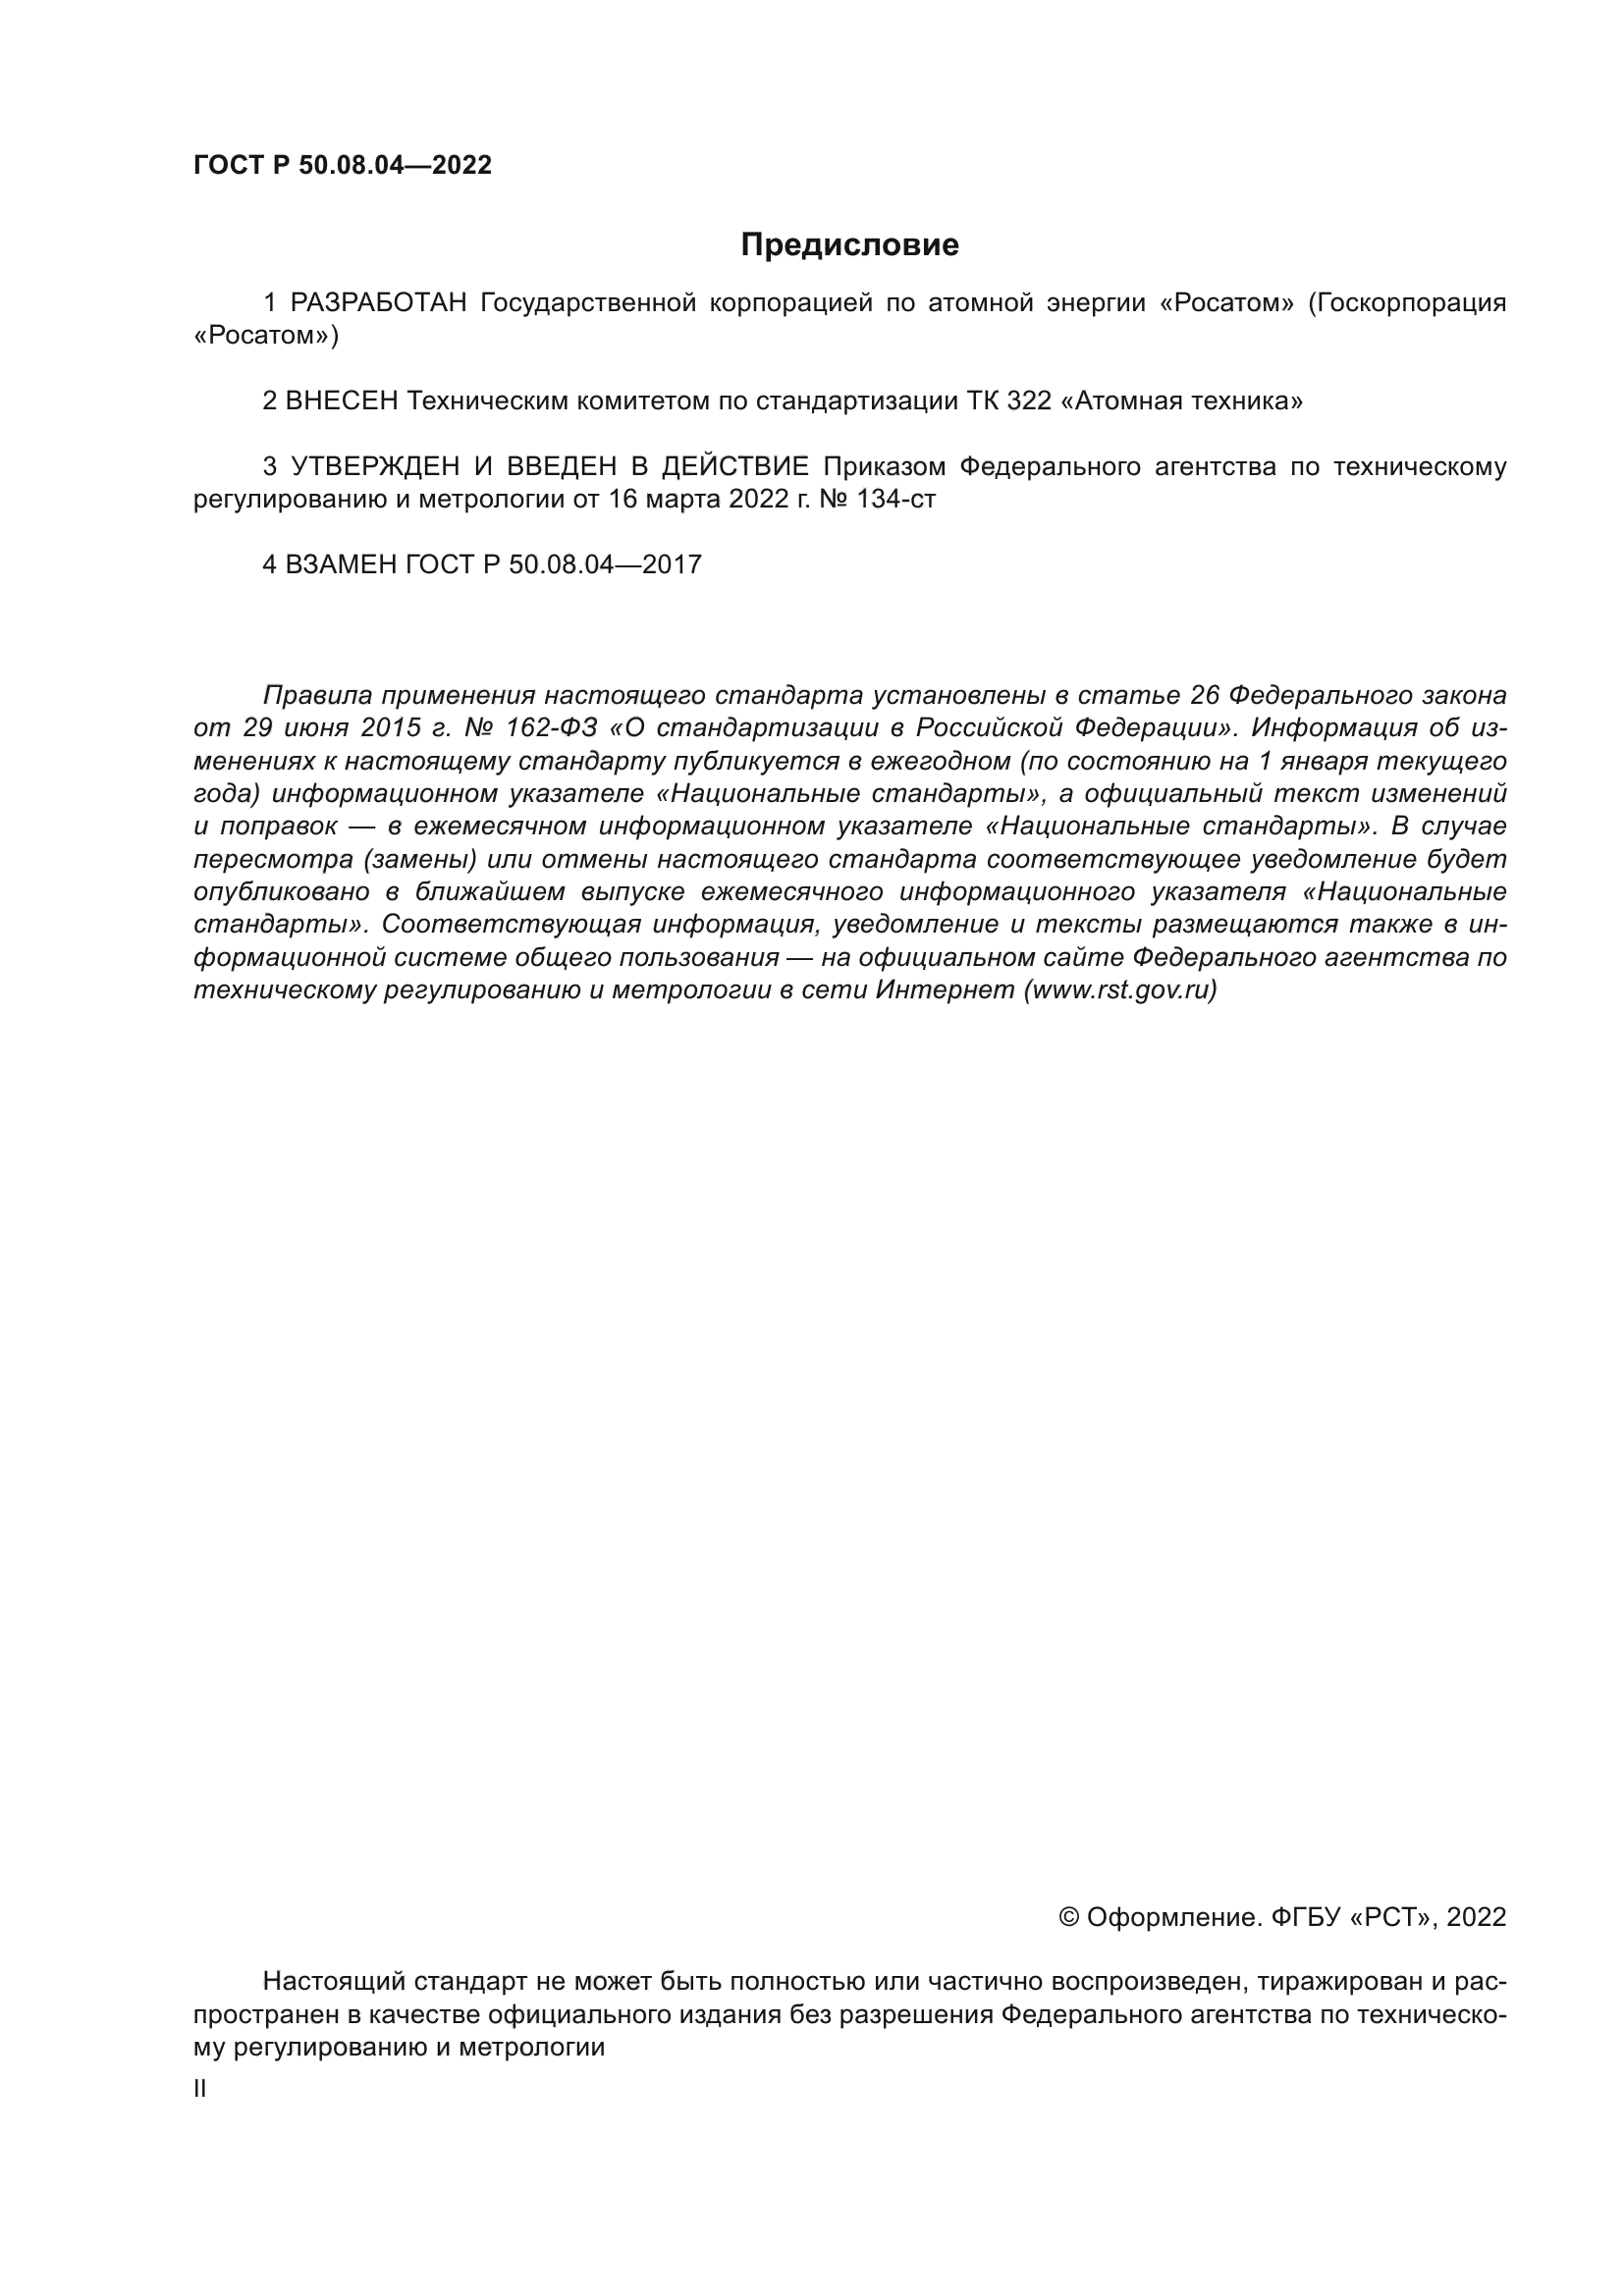 ГОСТ Р 50.08.04-2022